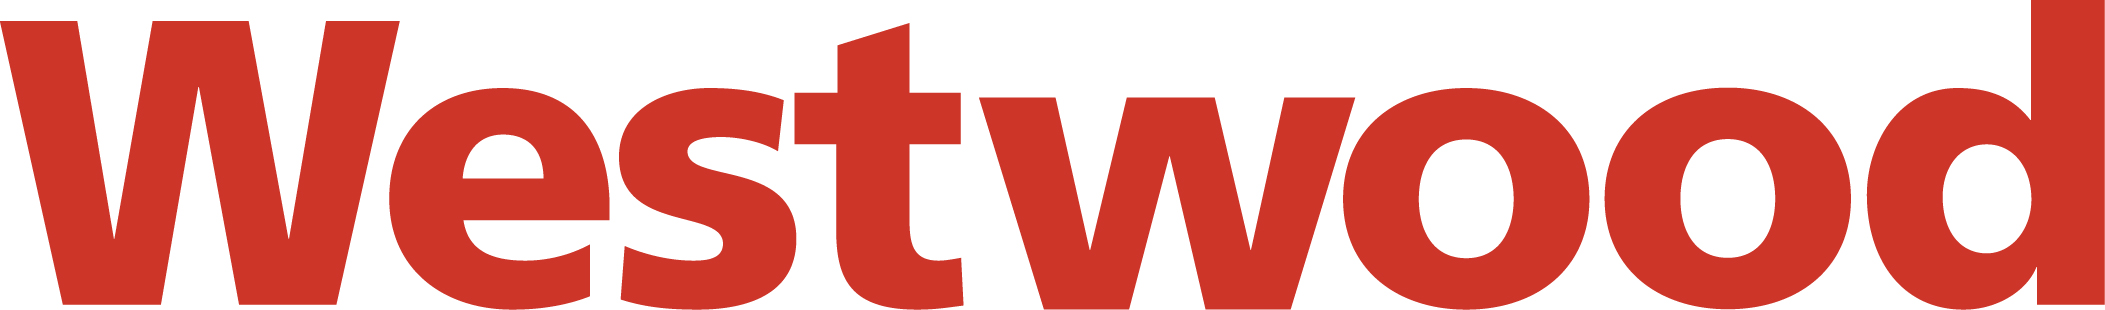 Westwood Professional Services logo